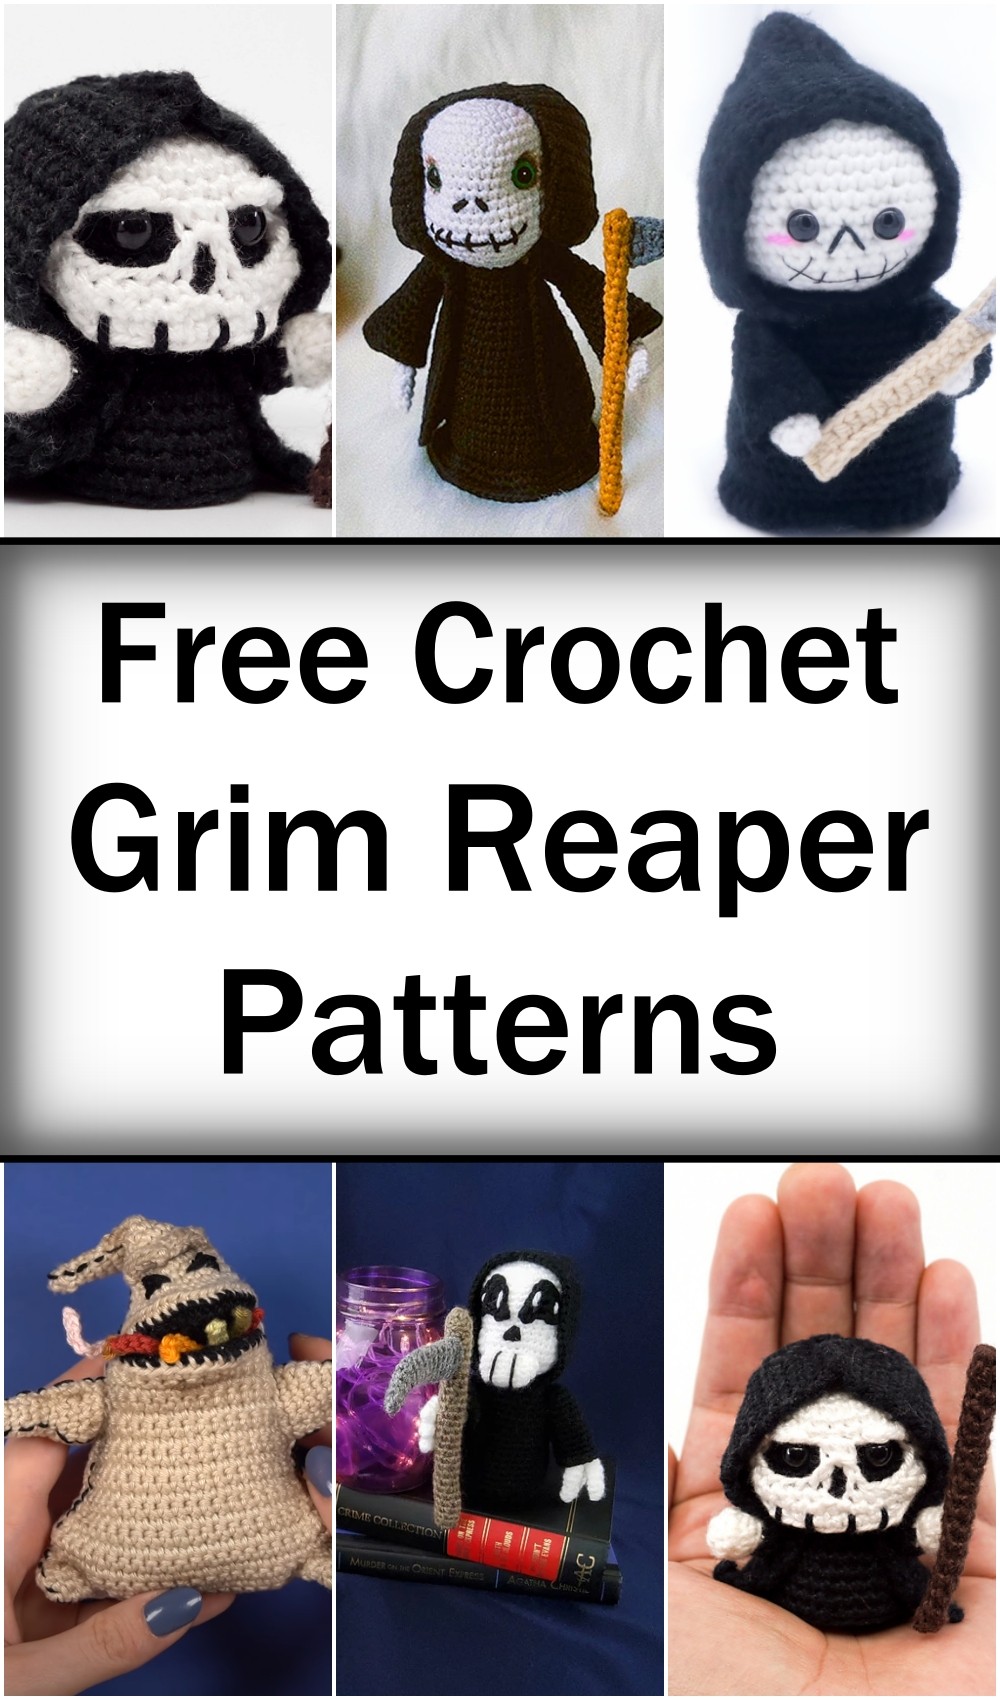 Free Crochet Grim Reaper Patterns